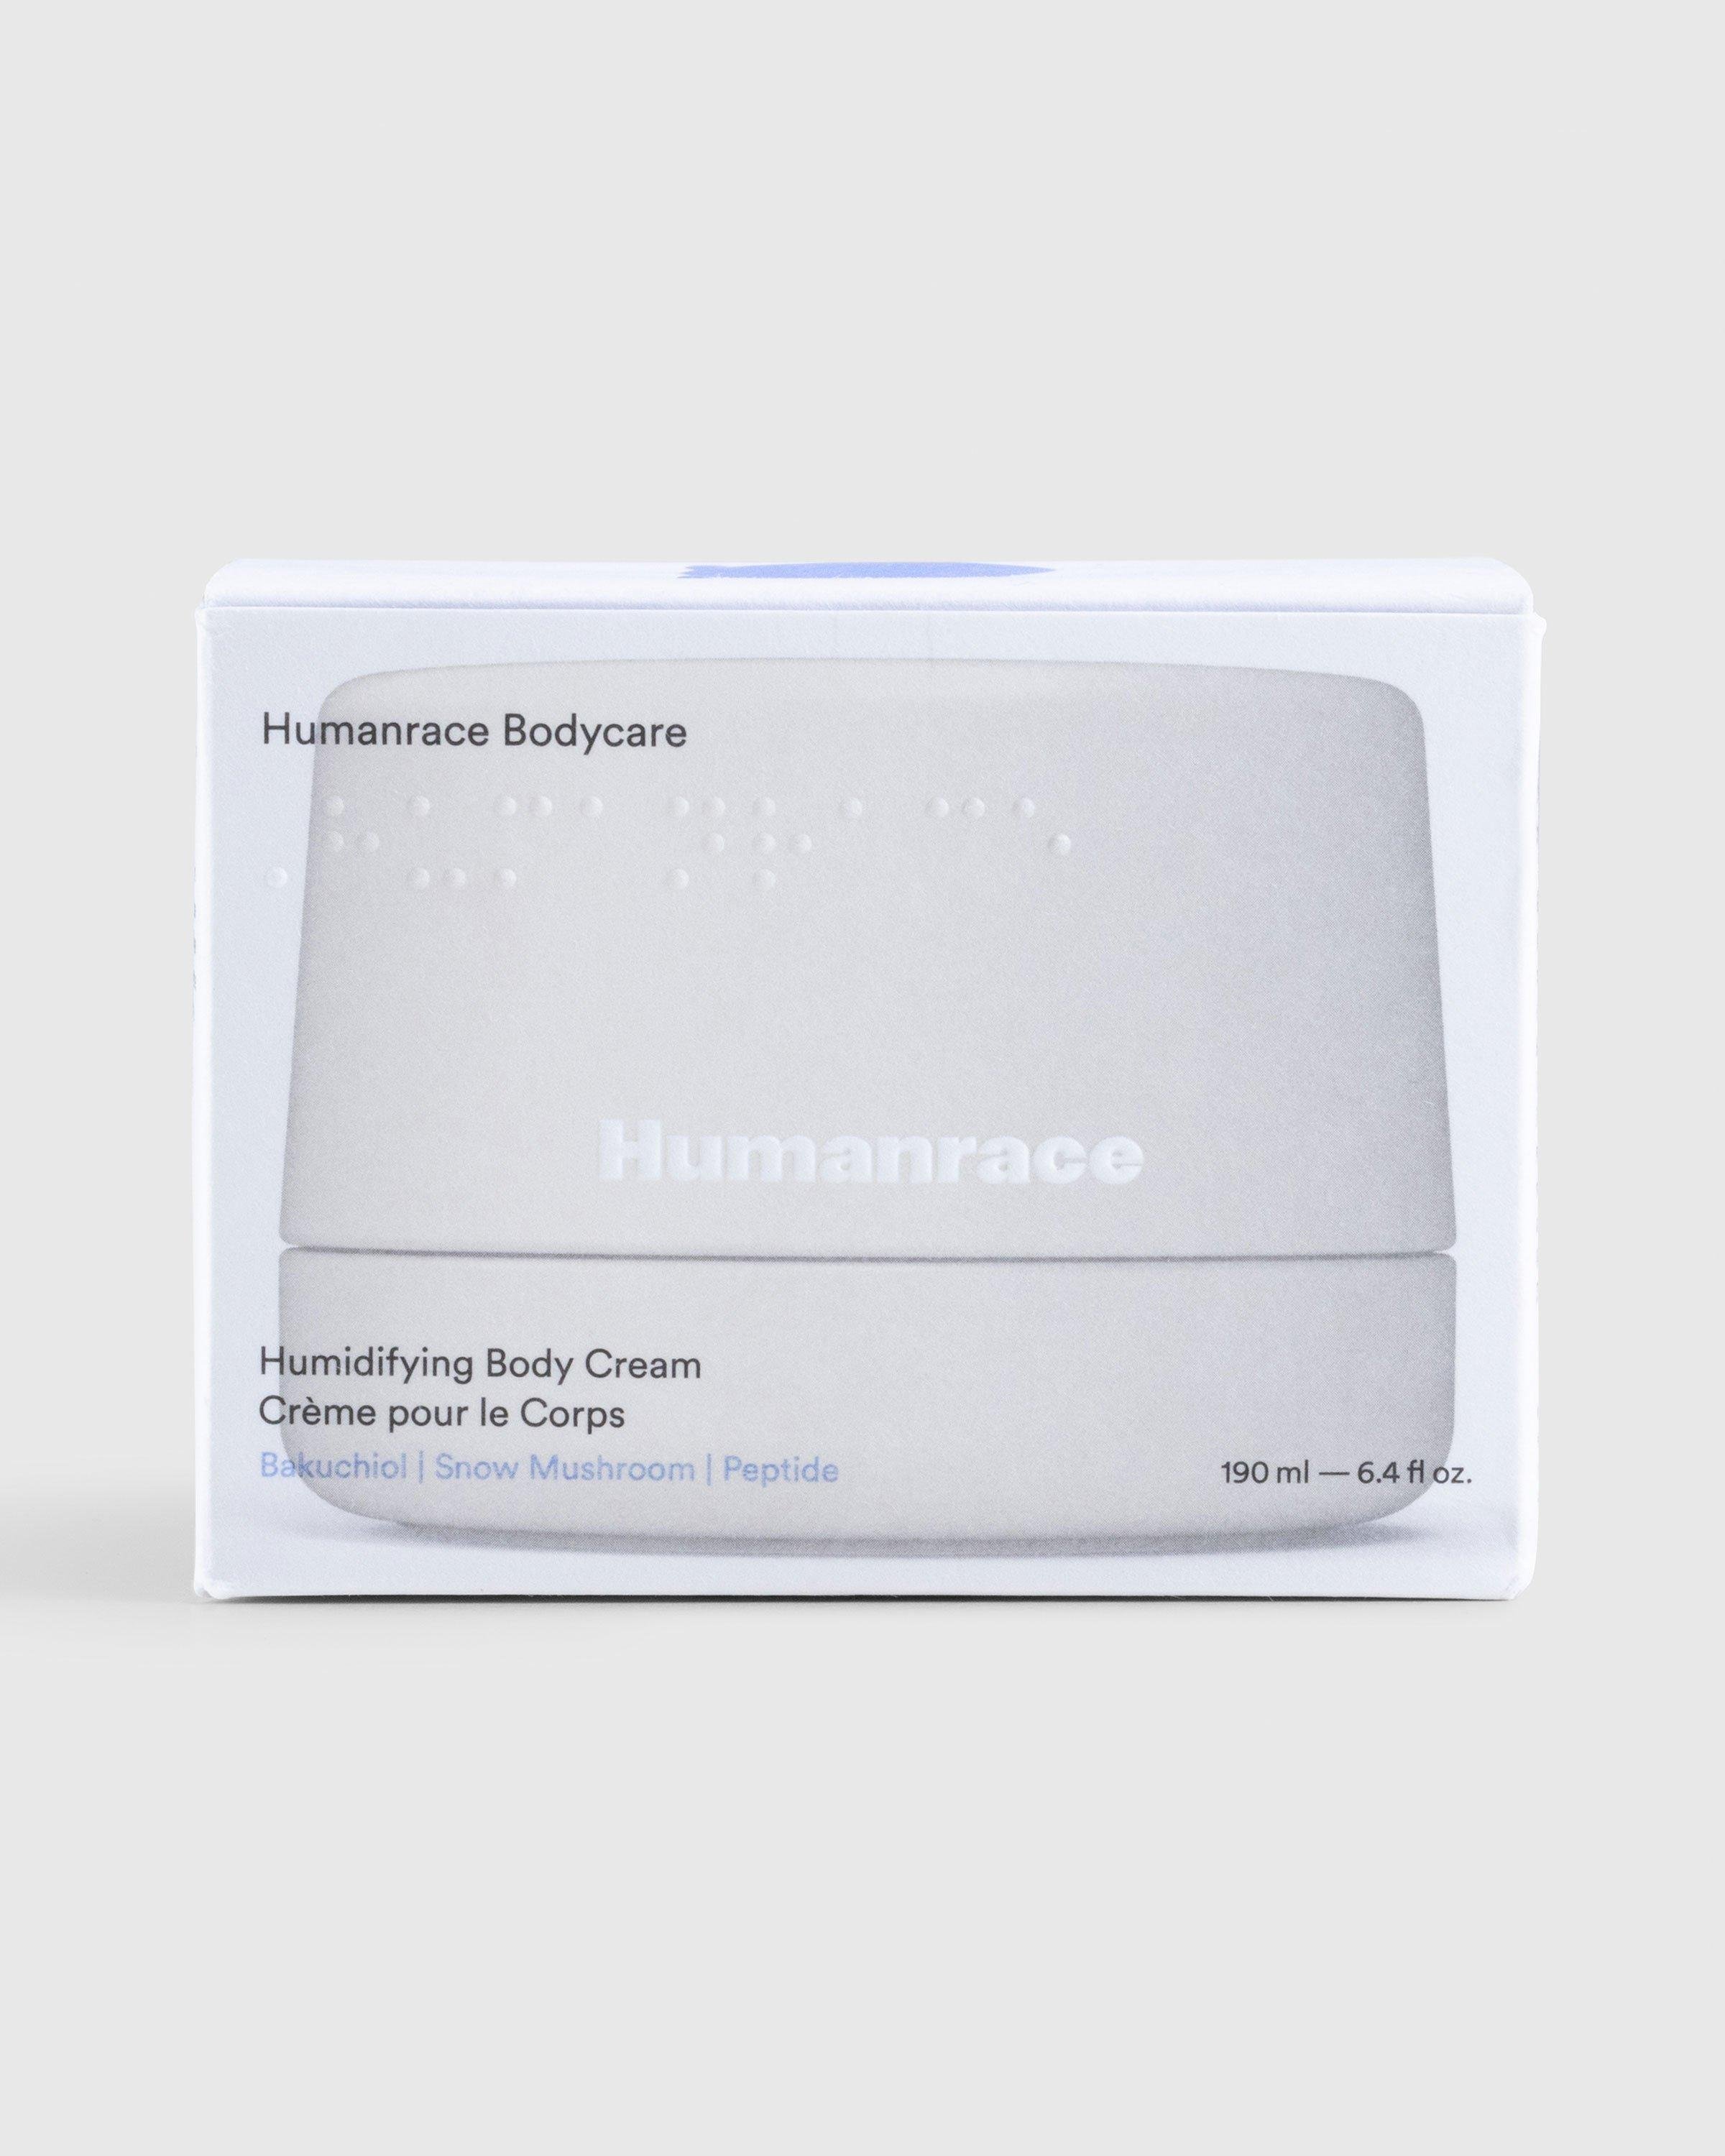 HumanraceHumidifying Body Cream by HIGHSNOBIETY